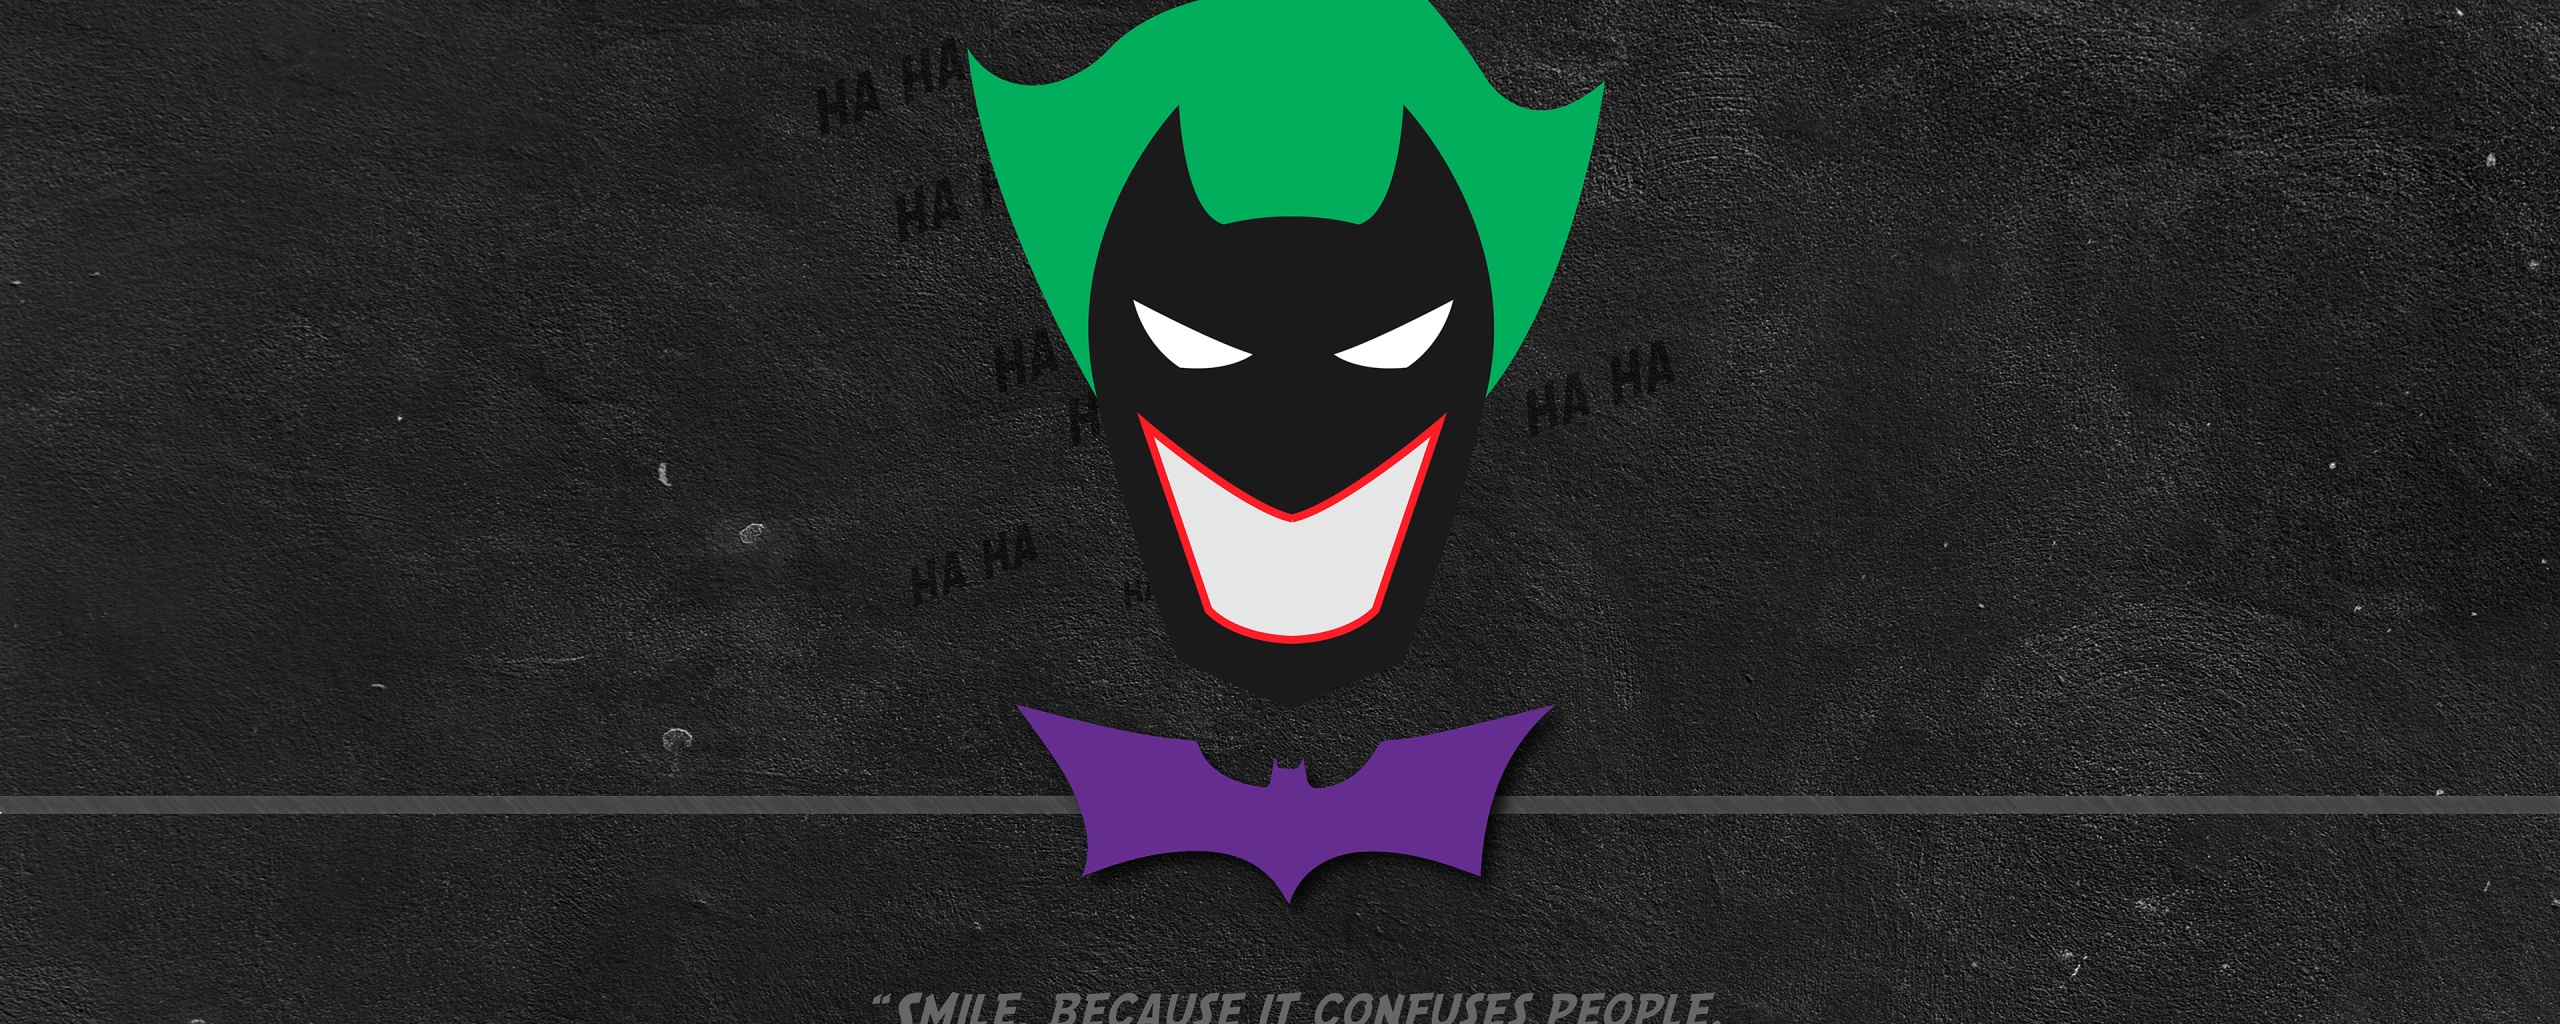 Batman Joker Minimal Typography Wallpaper 4K